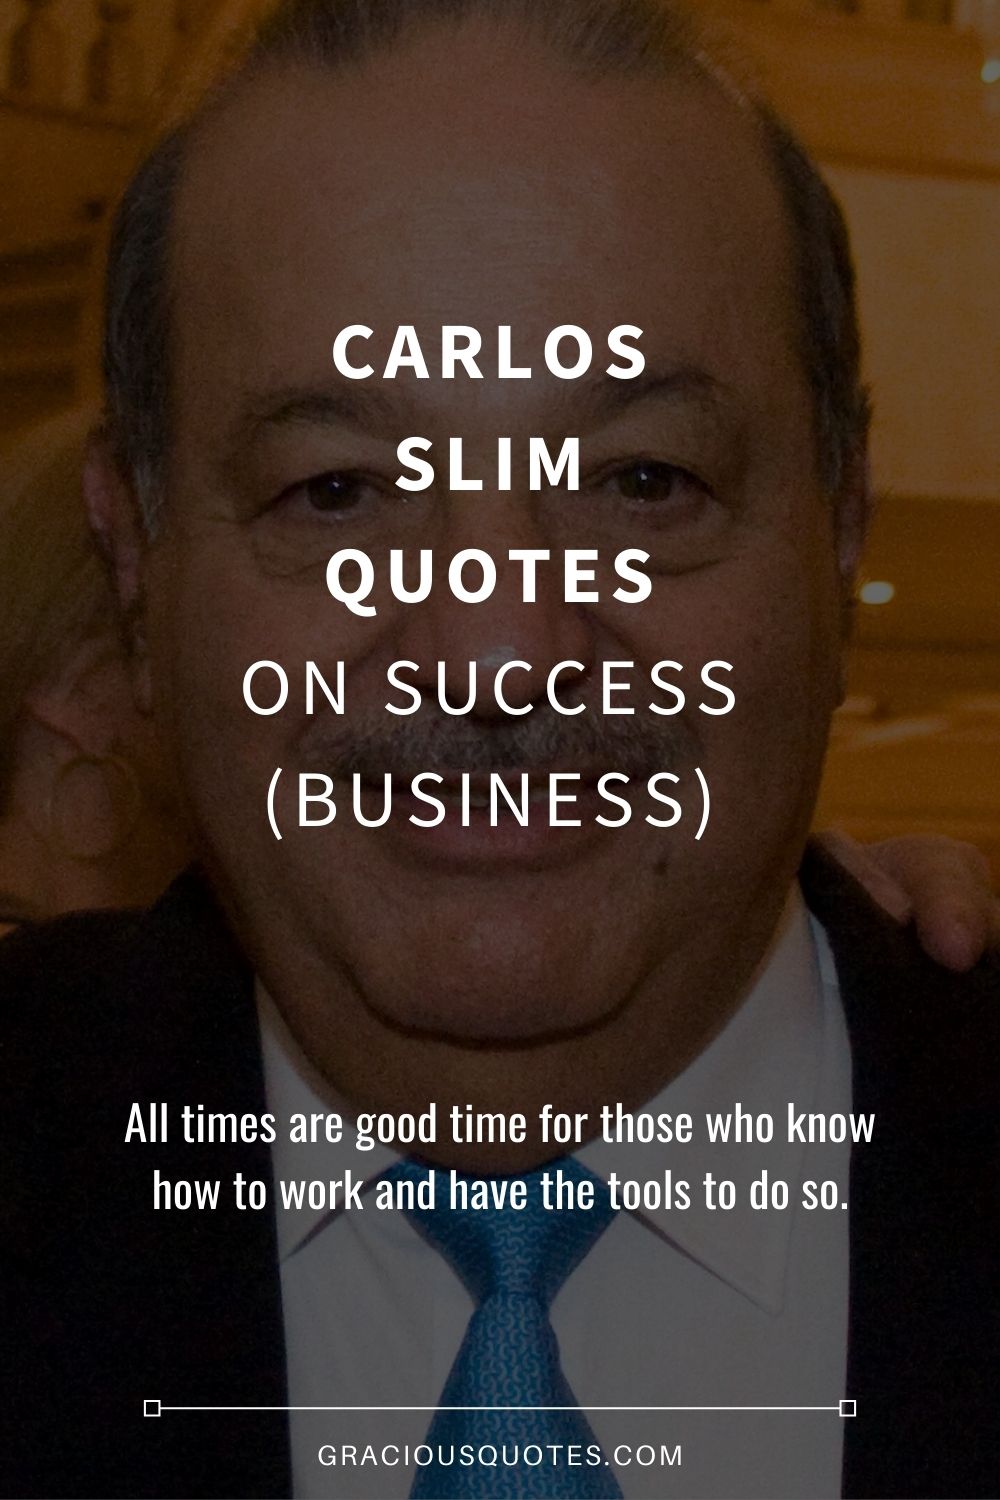 Carlos Slim Quotes on Success (BUSINESS) - Gracious Quotes